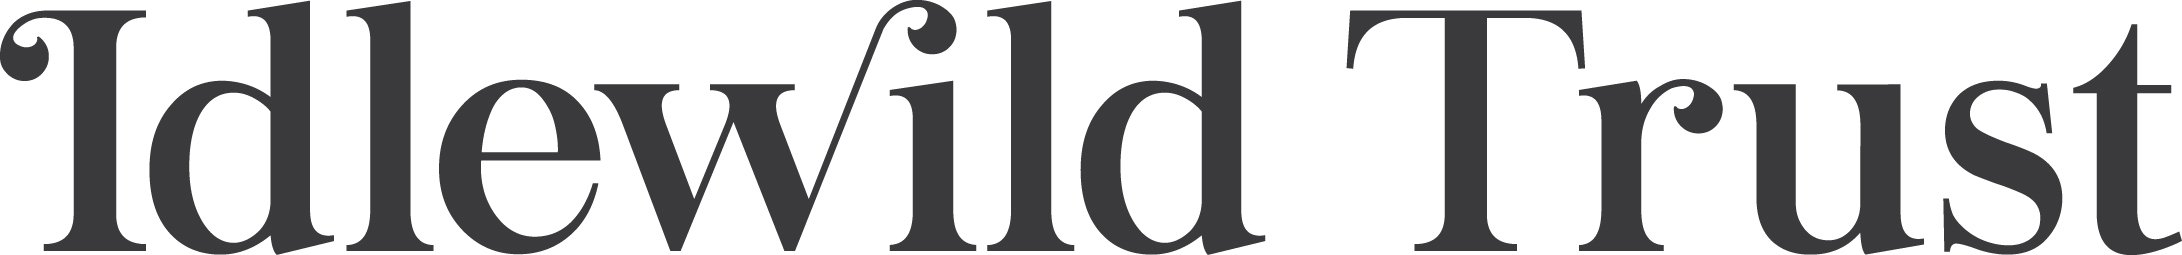 New Idlewild Logo 2016.jpg